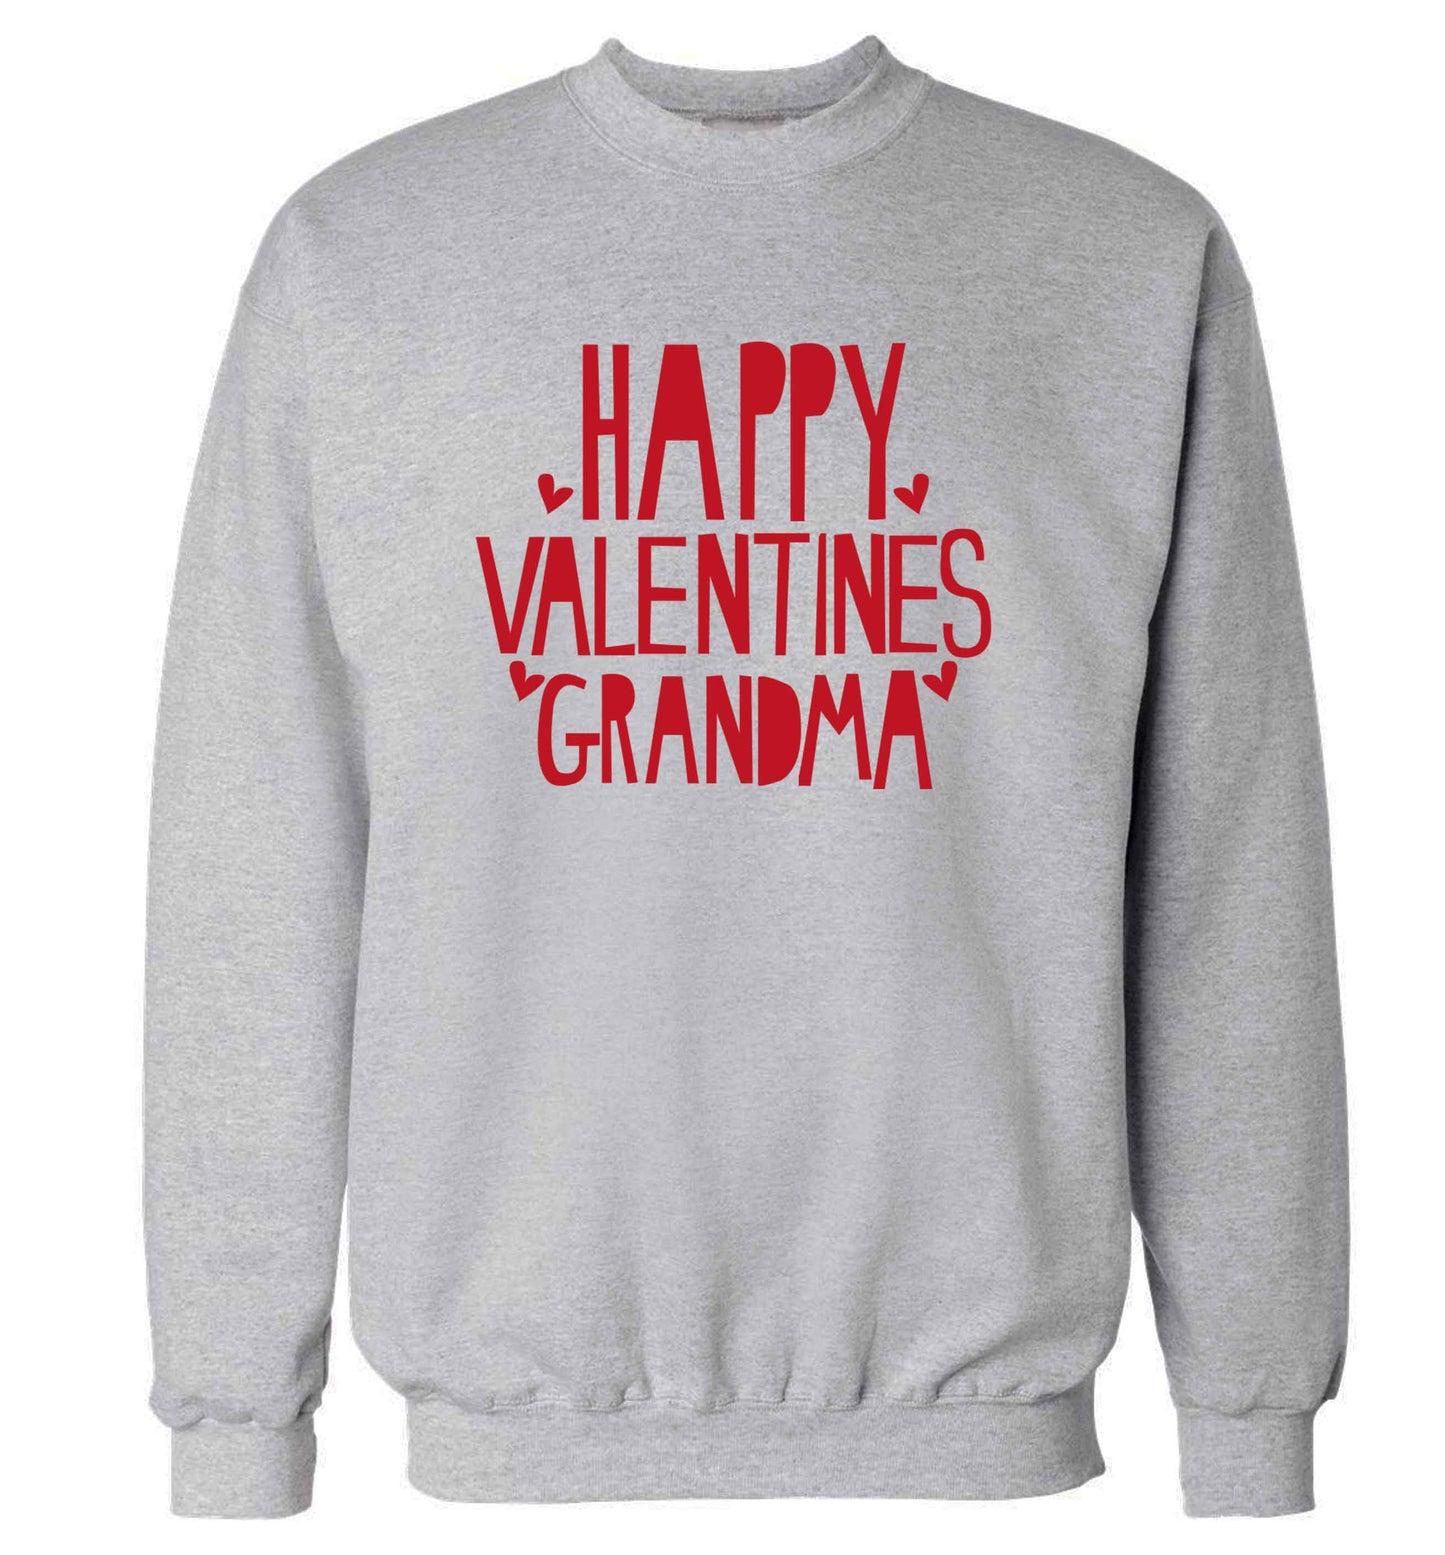 Happy valentines grandma adult's unisex grey sweater 2XL